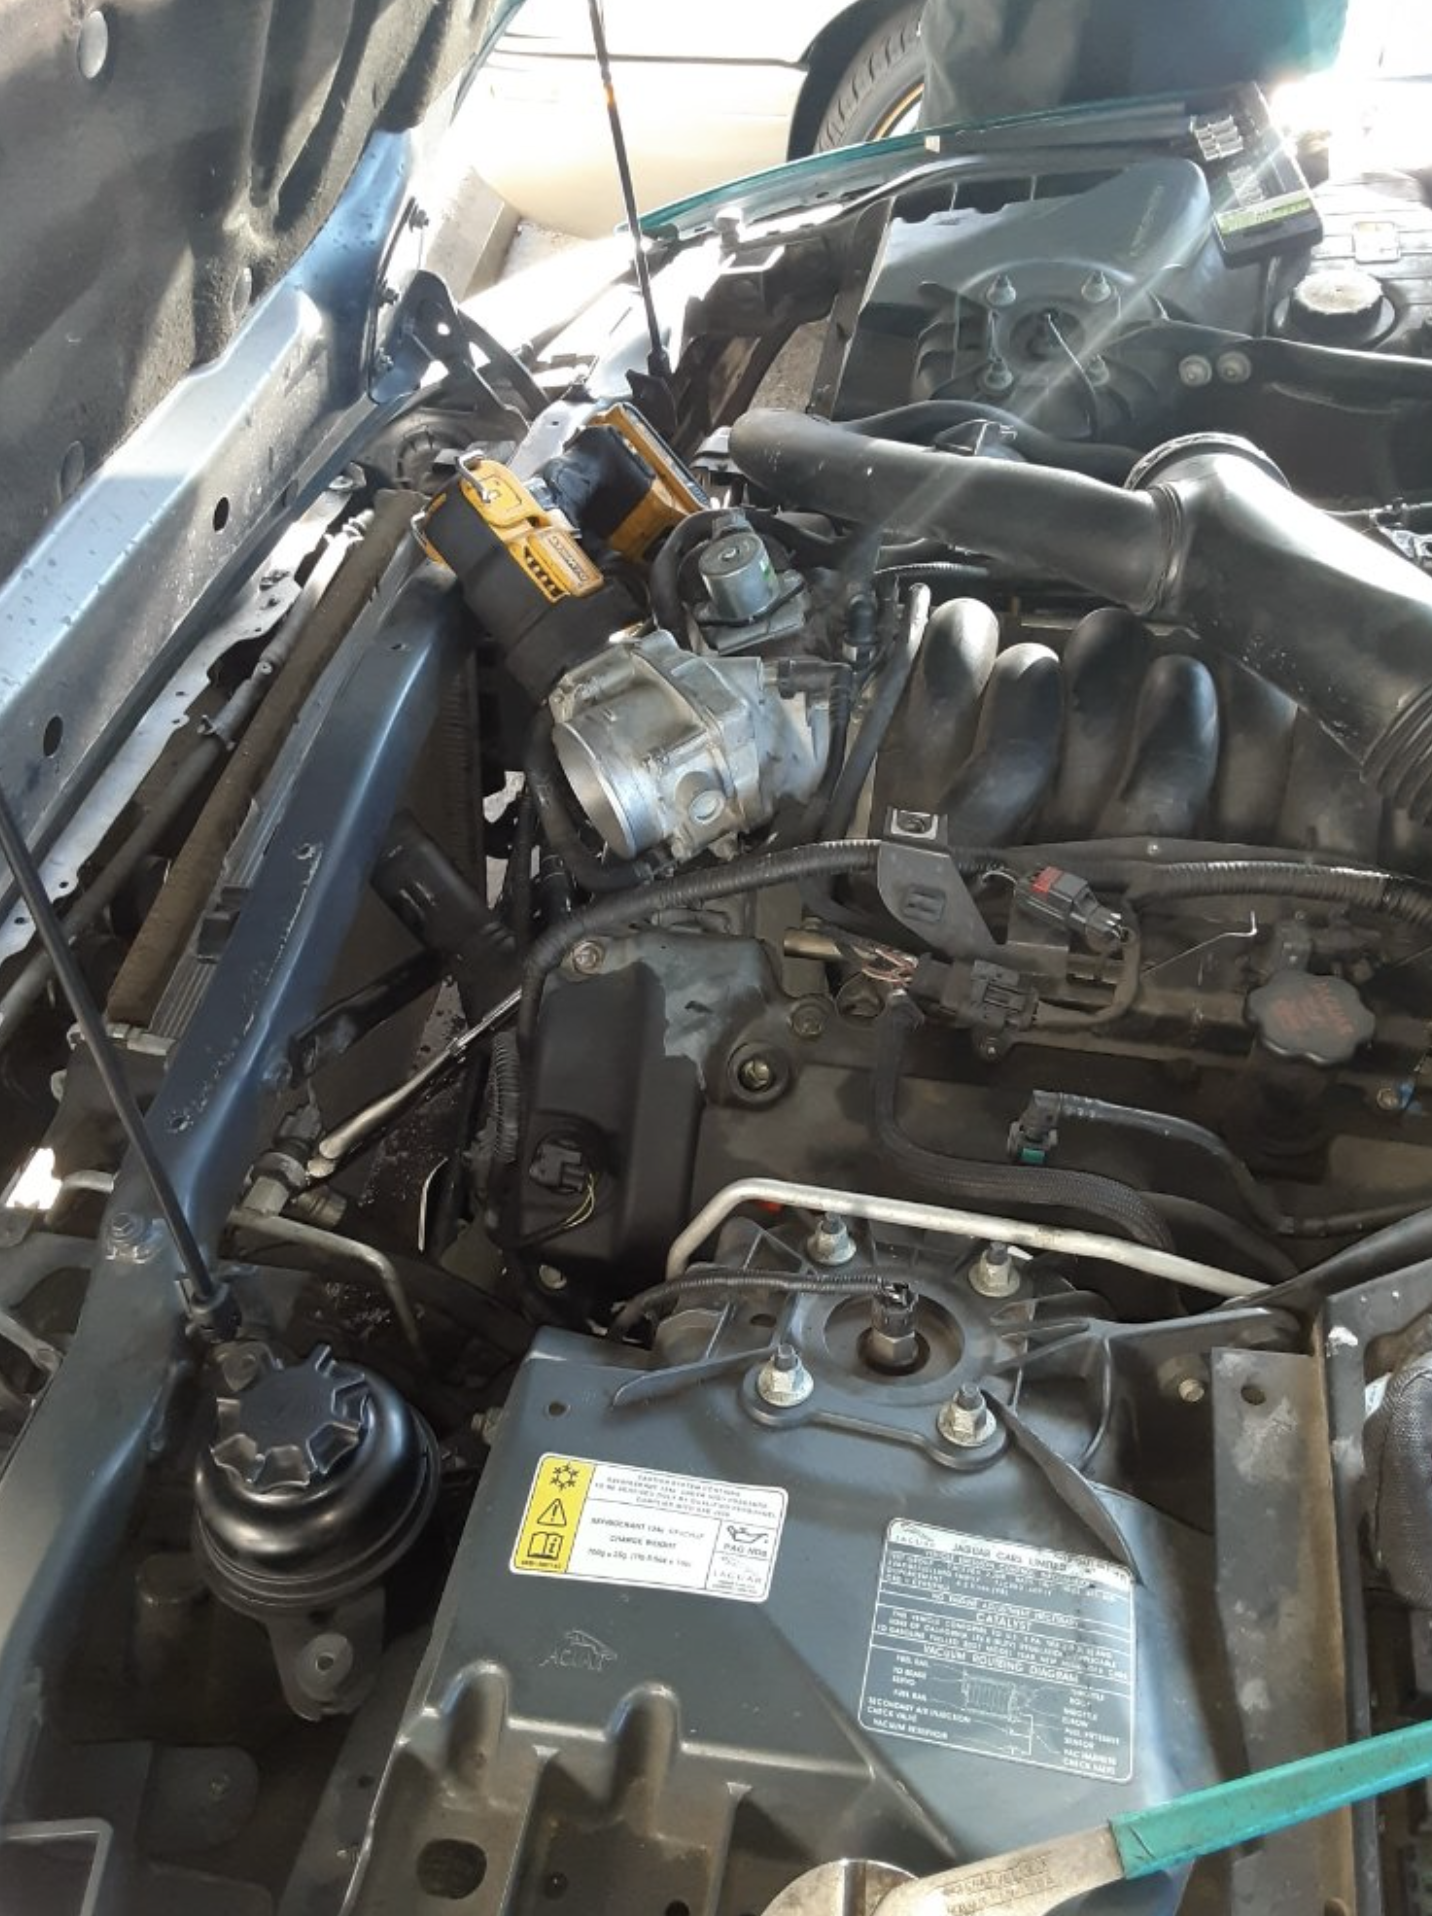 this image shows engine repair service in Santa Ana, CA